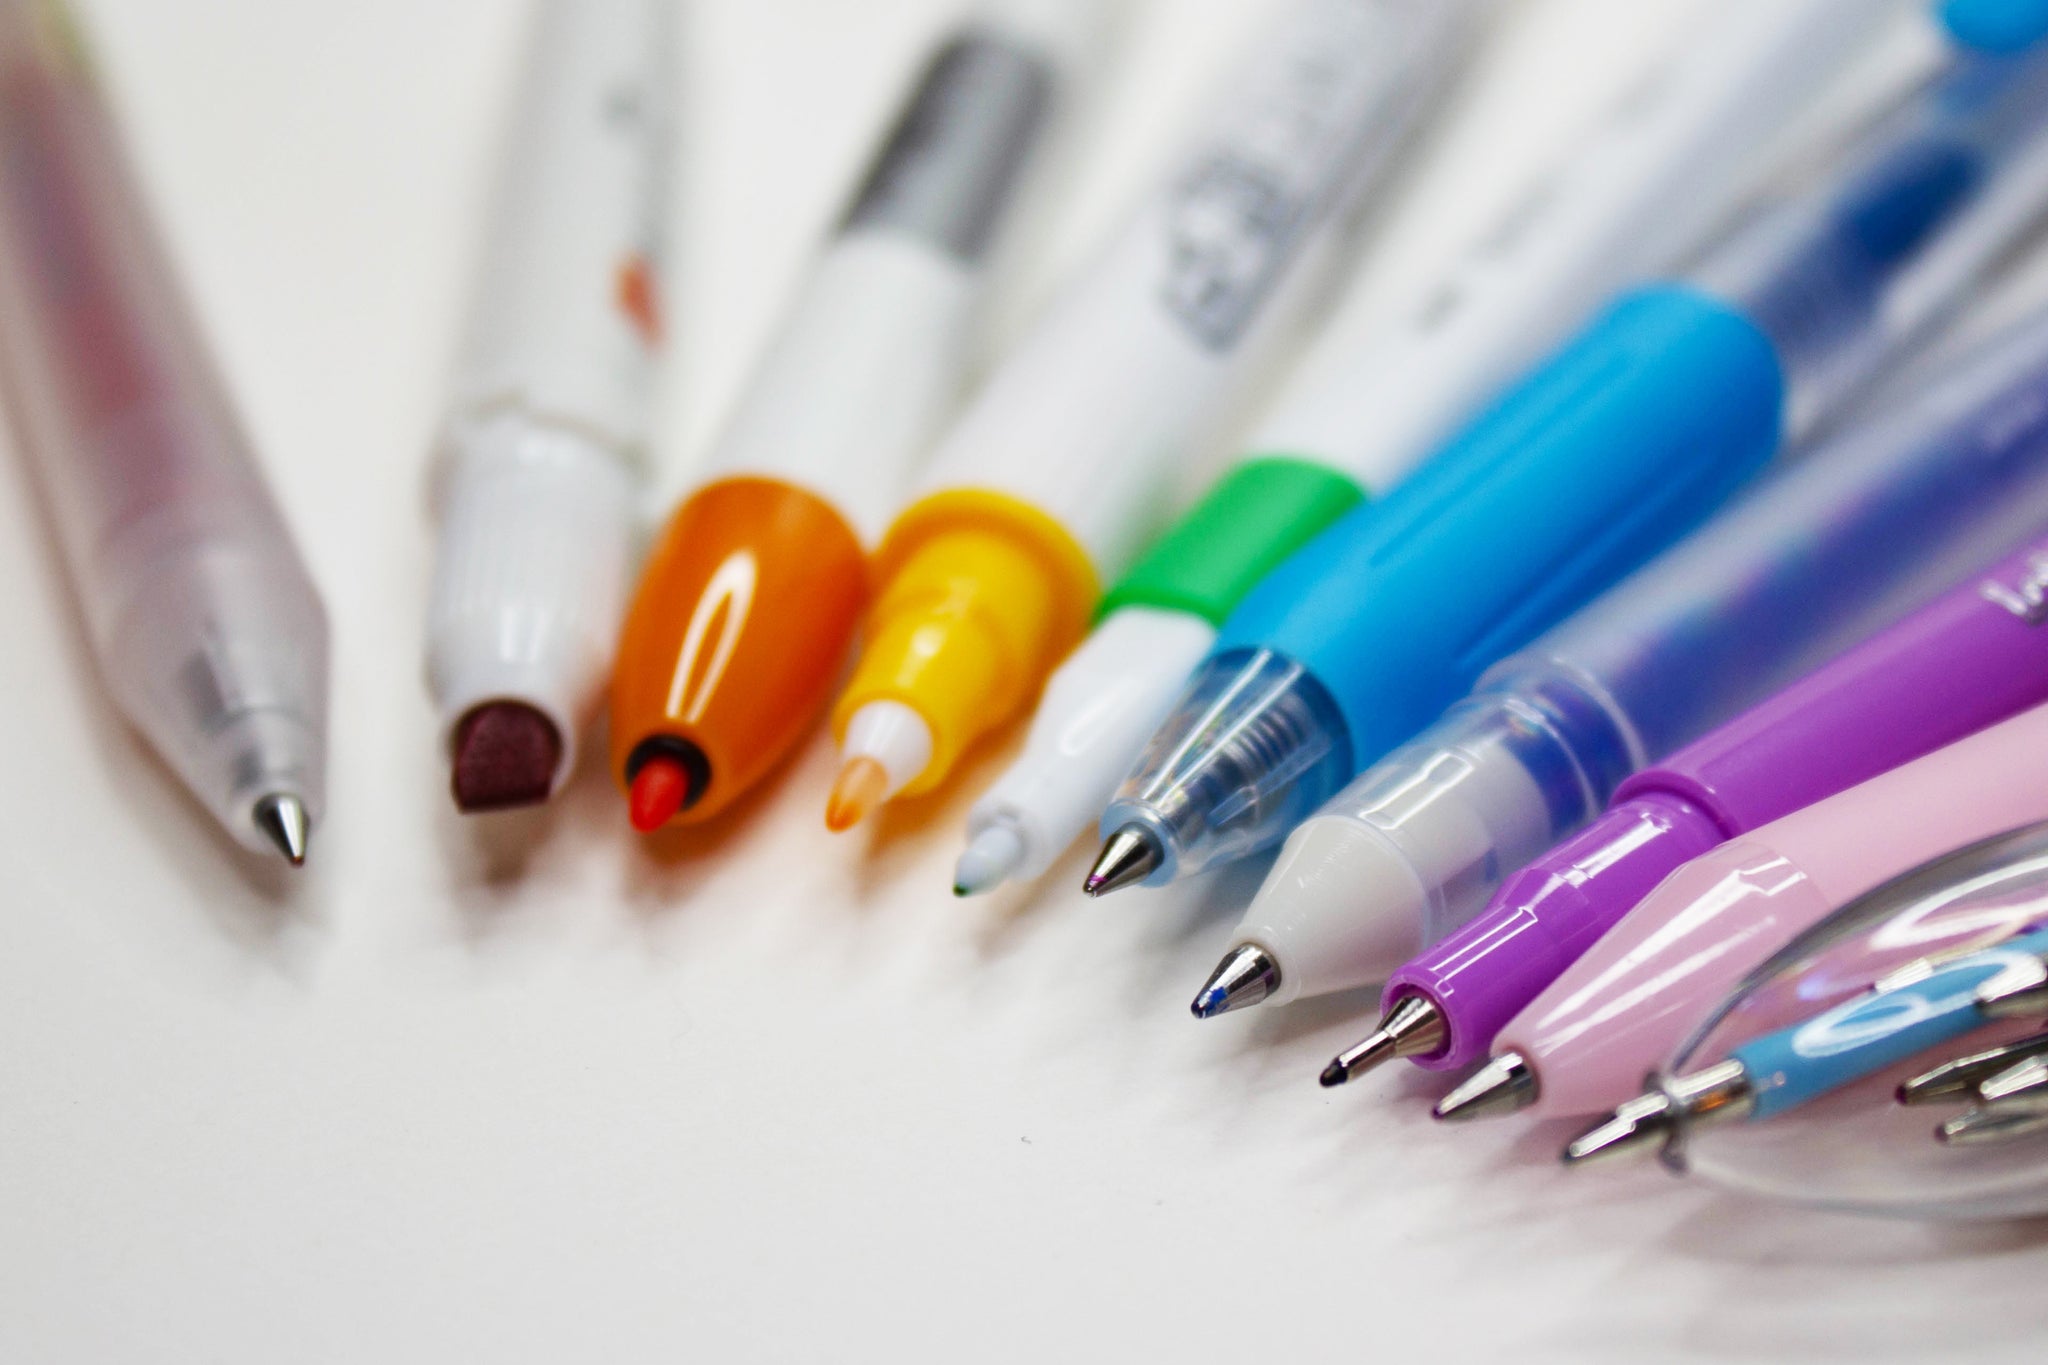 Gel Pens, 2 pack, 6 Colors. Rainbow Colors. BRAND NEW 0.5MM